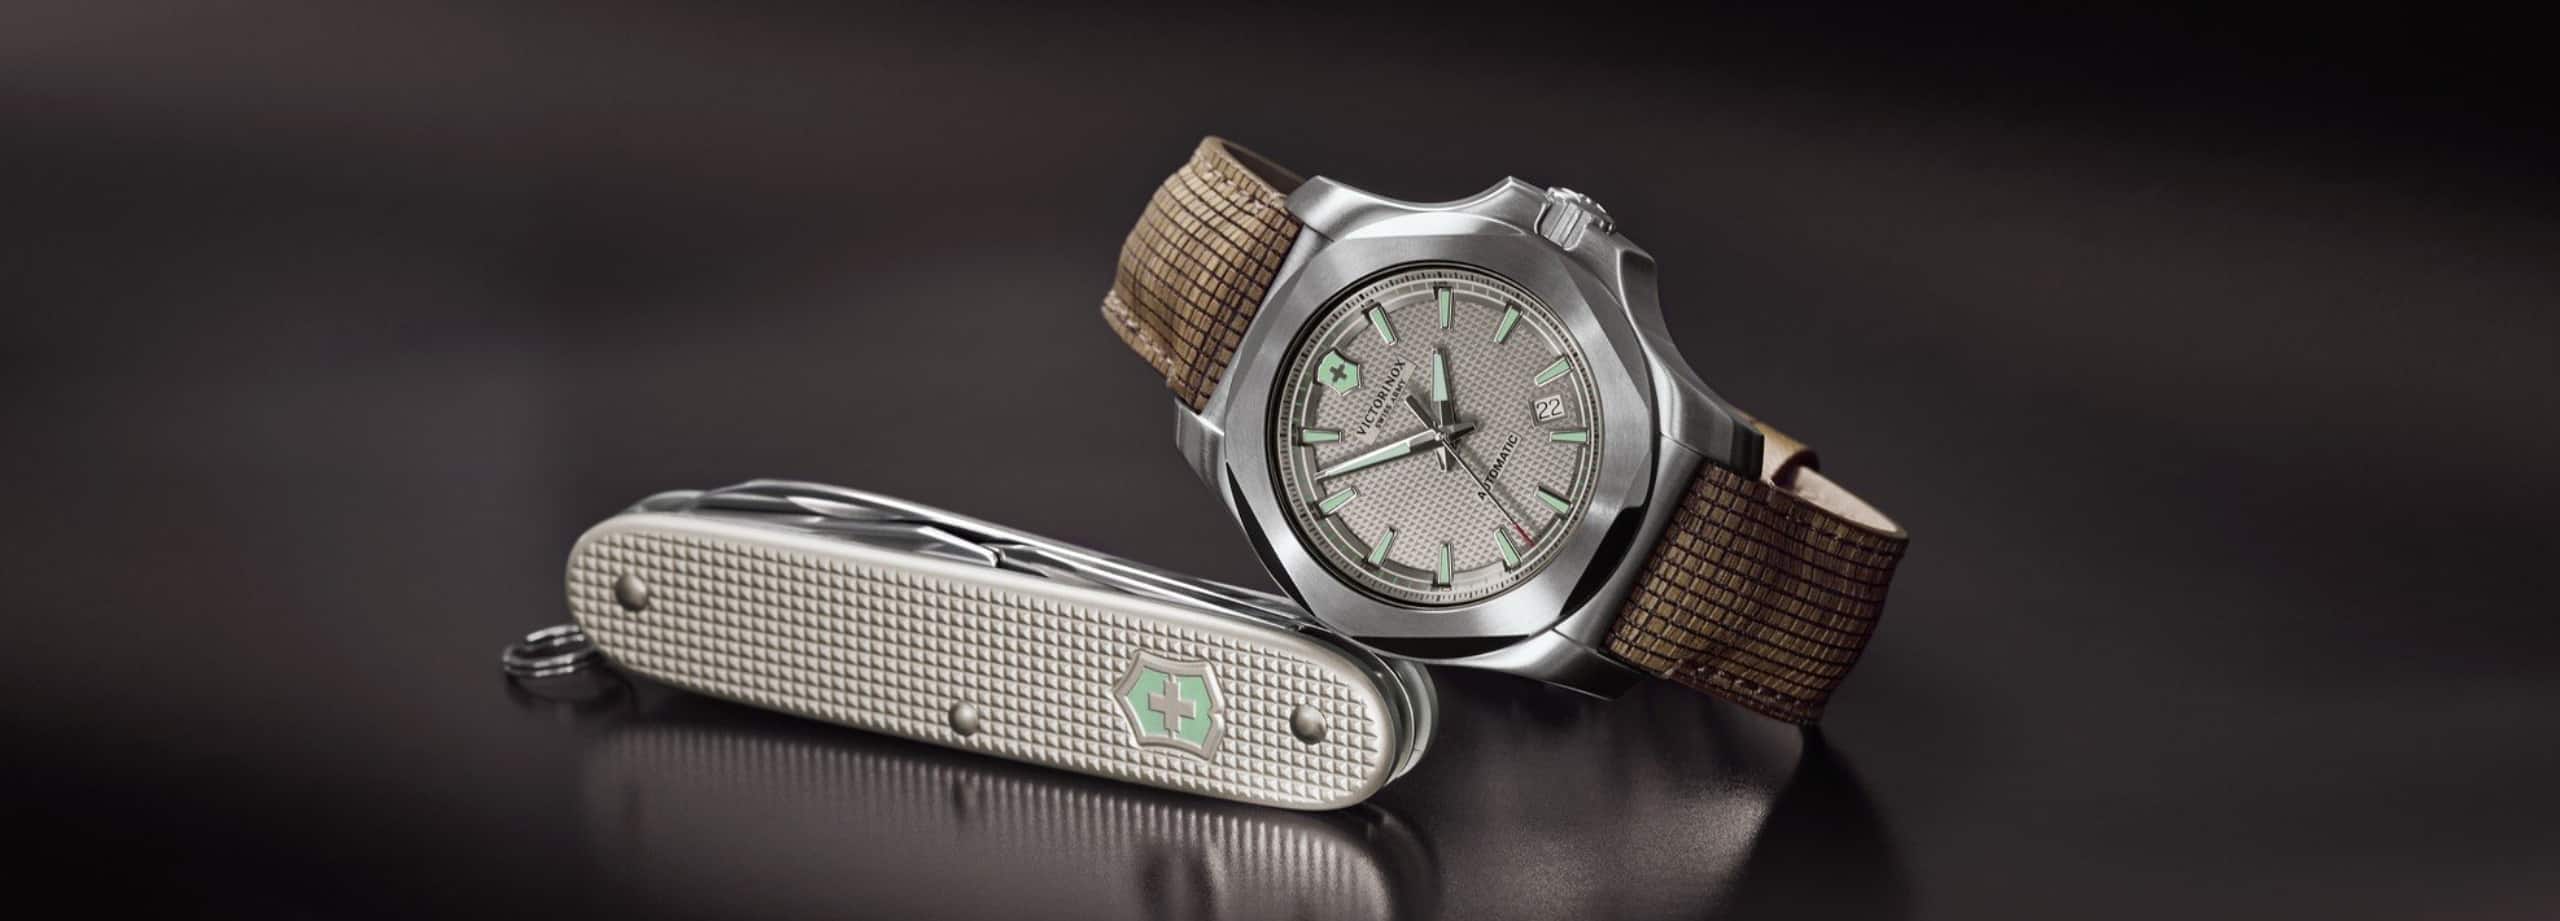 victorinox zegarki b2b akcesoria outdoor survival gadżety reklamowe